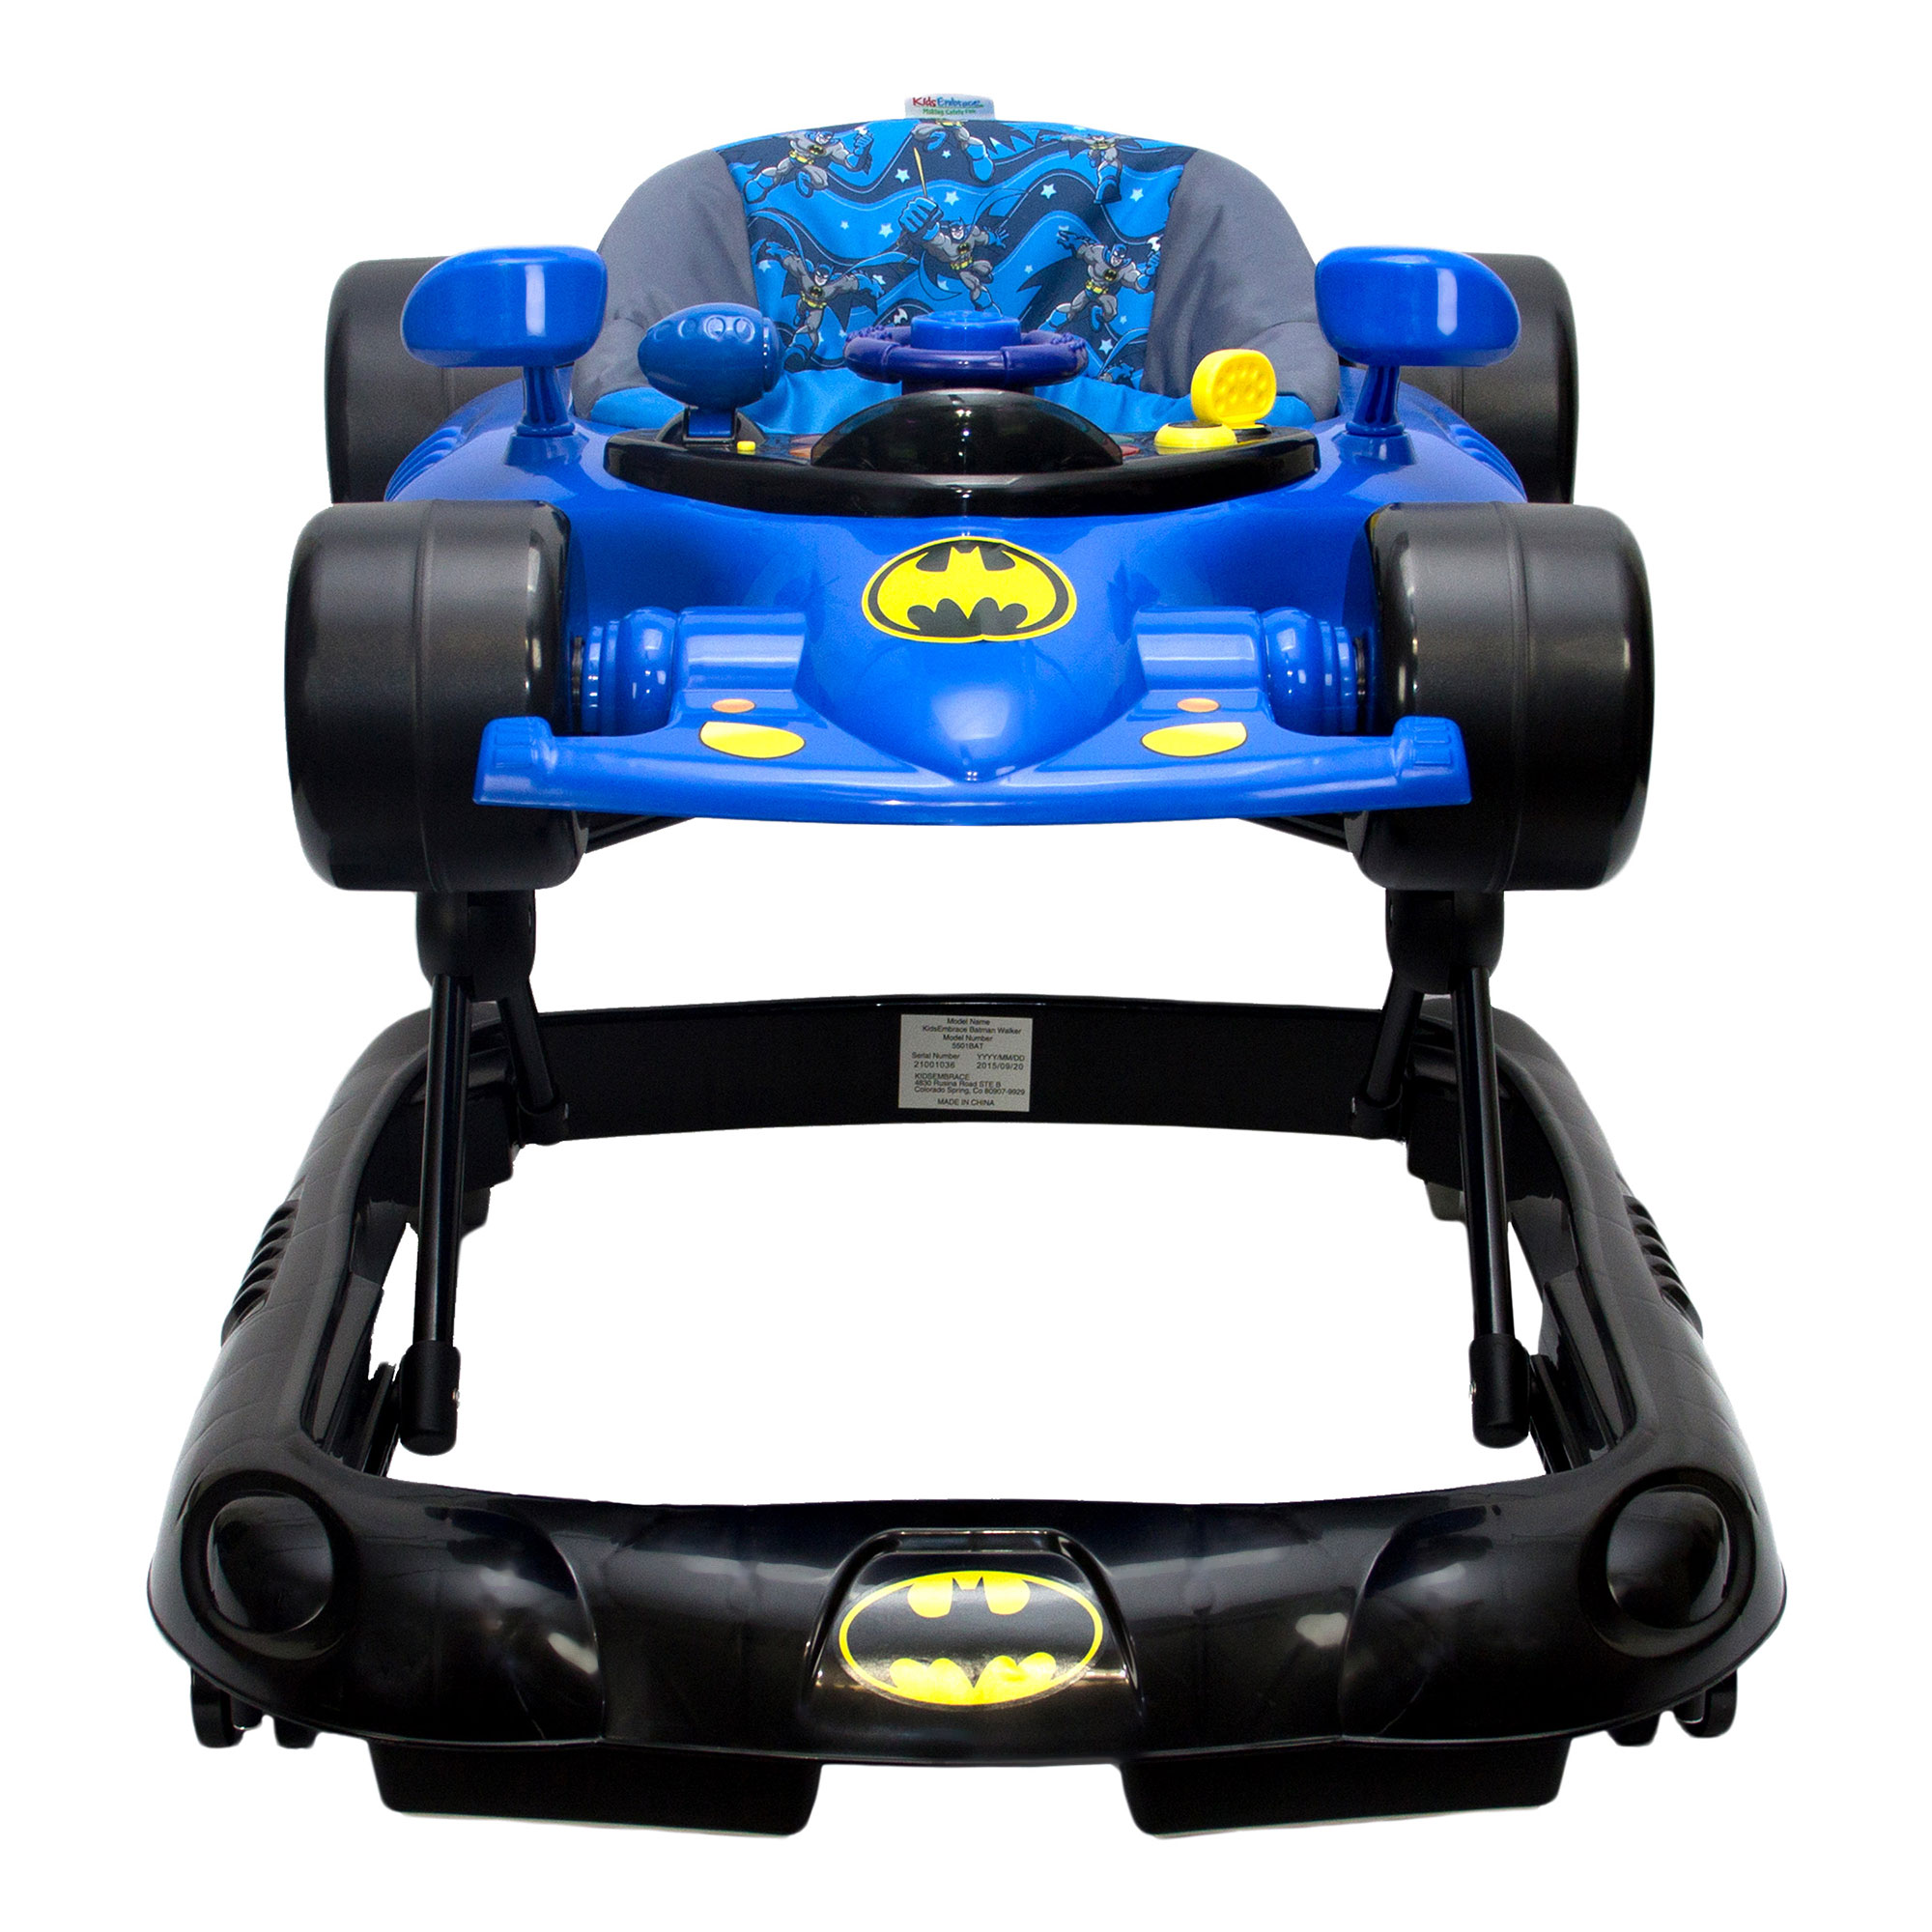 KidsEmbrace Batman Baby Activity Station Race Car Walker with Lights - image 2 of 9